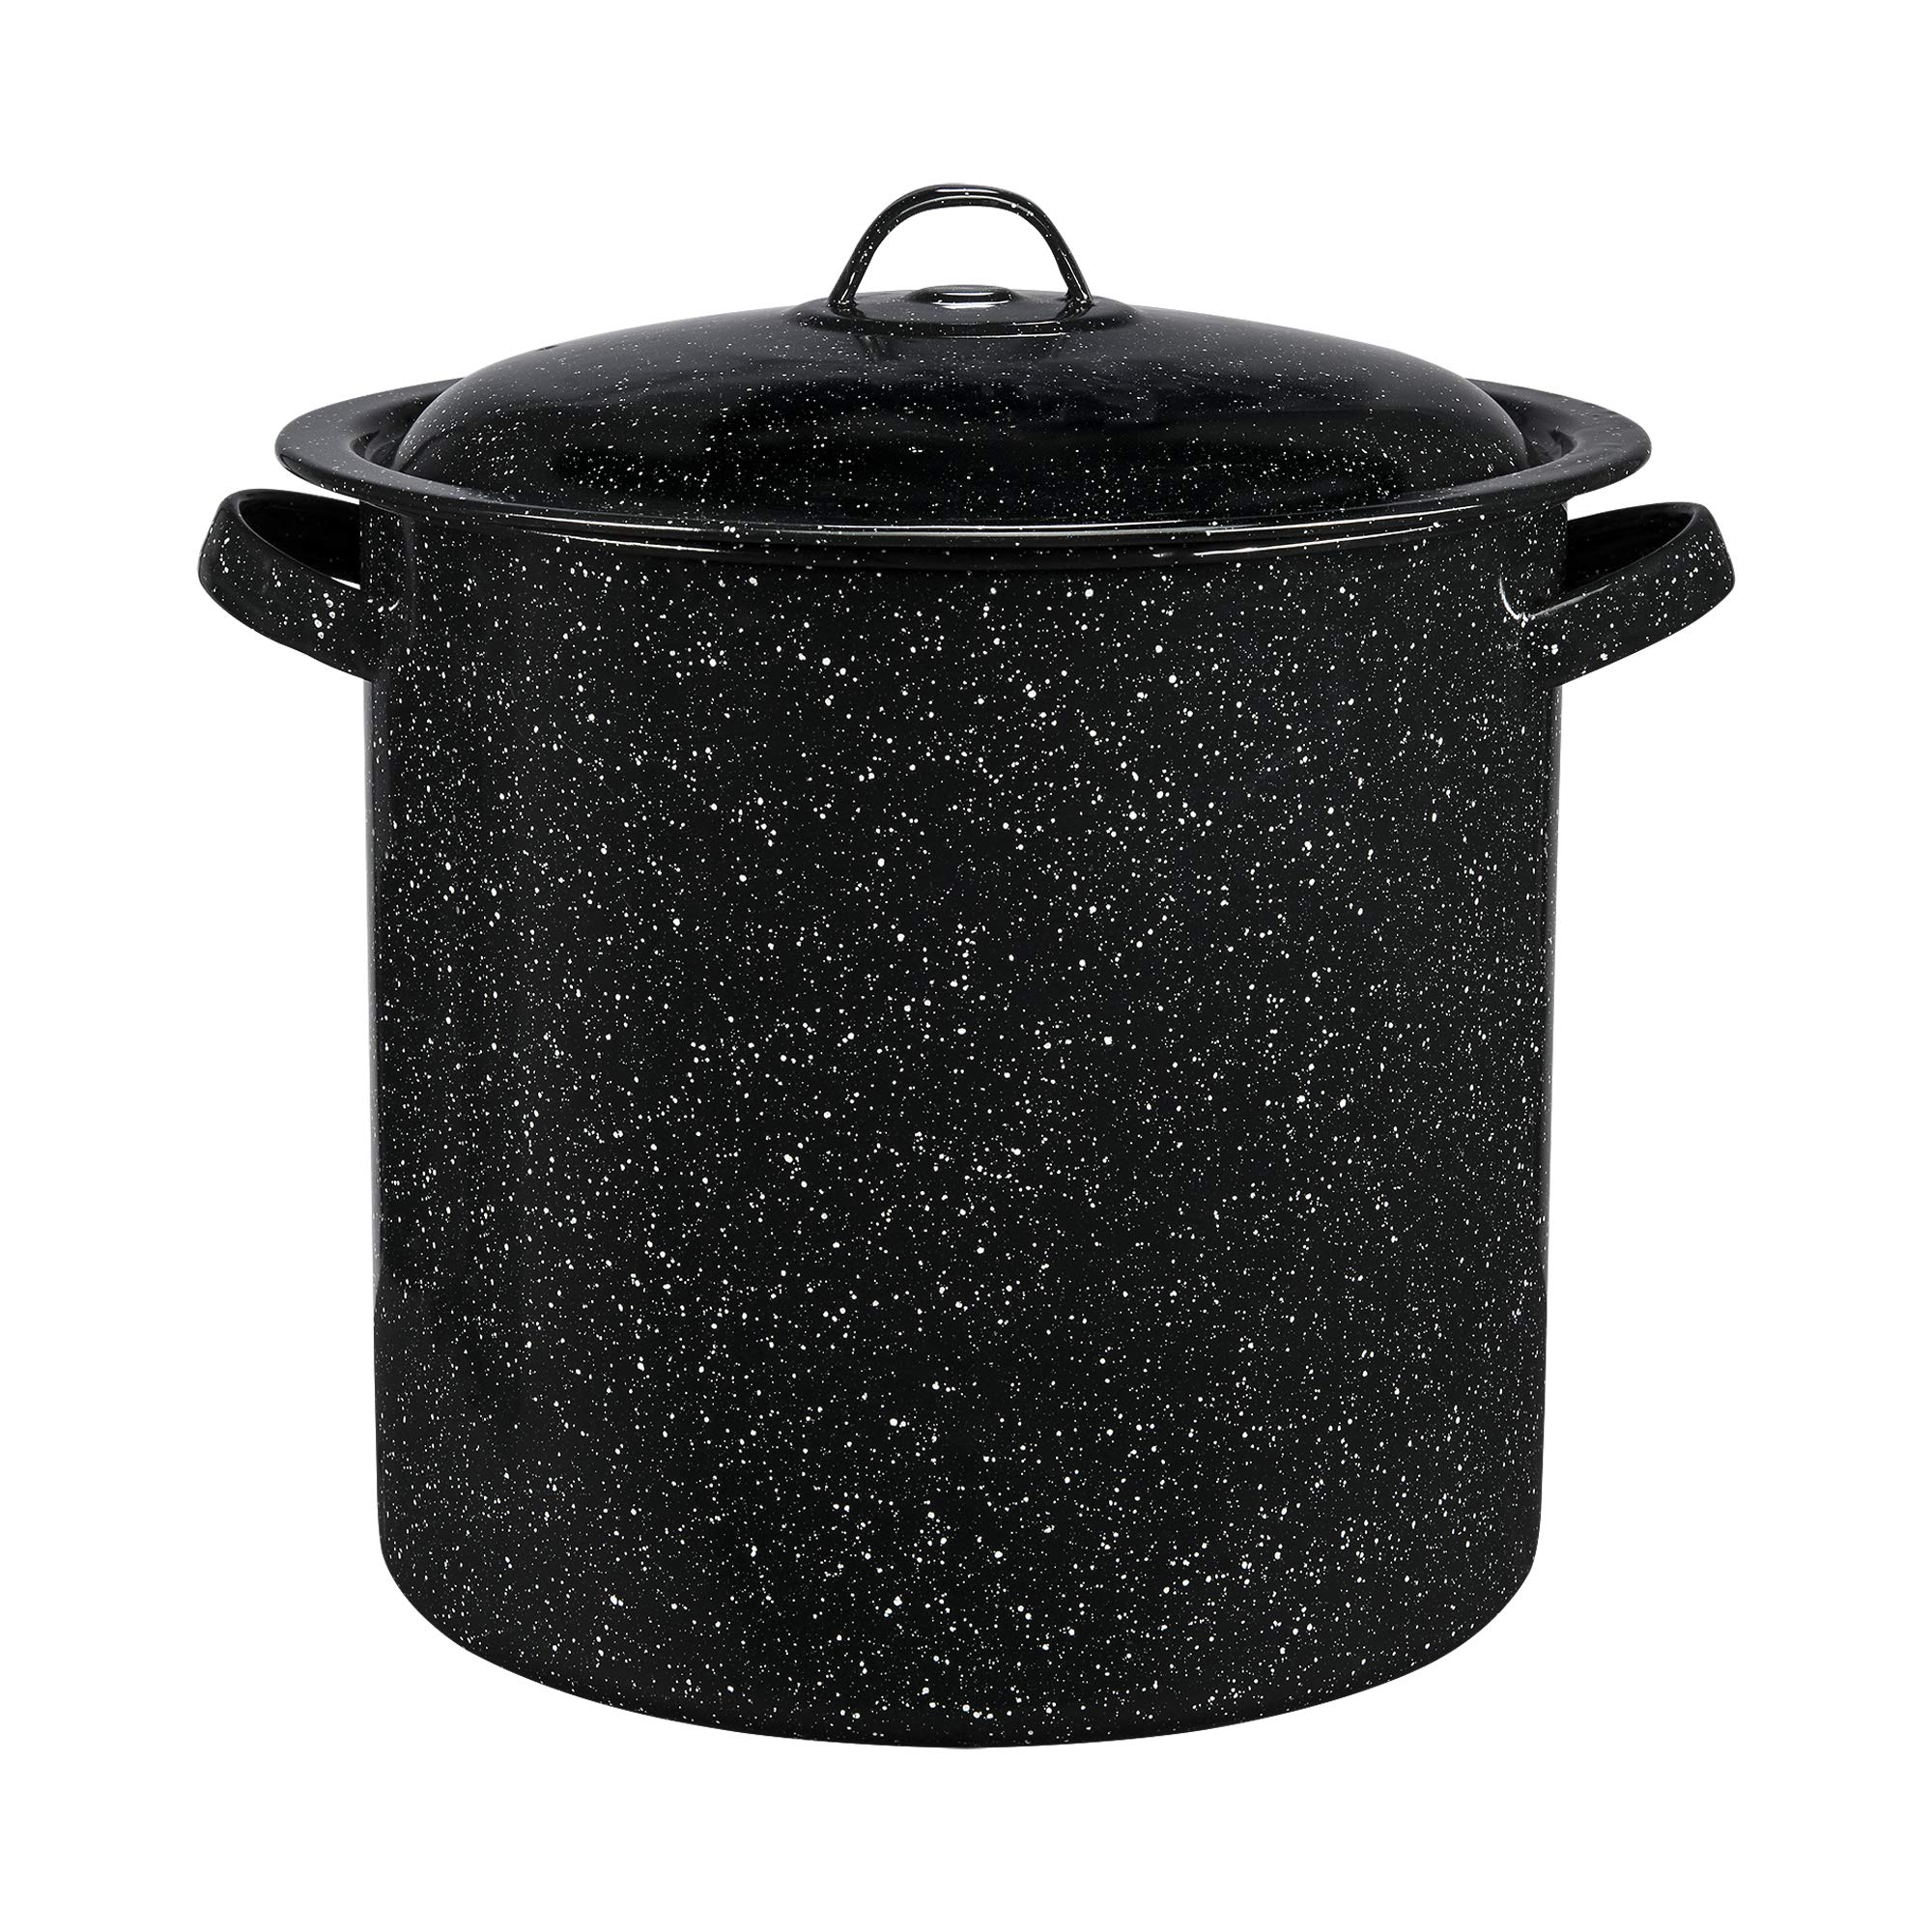 Granite Ware Enamel on Steel 15.5-Quart Stock Pot with lid, Speckled Black